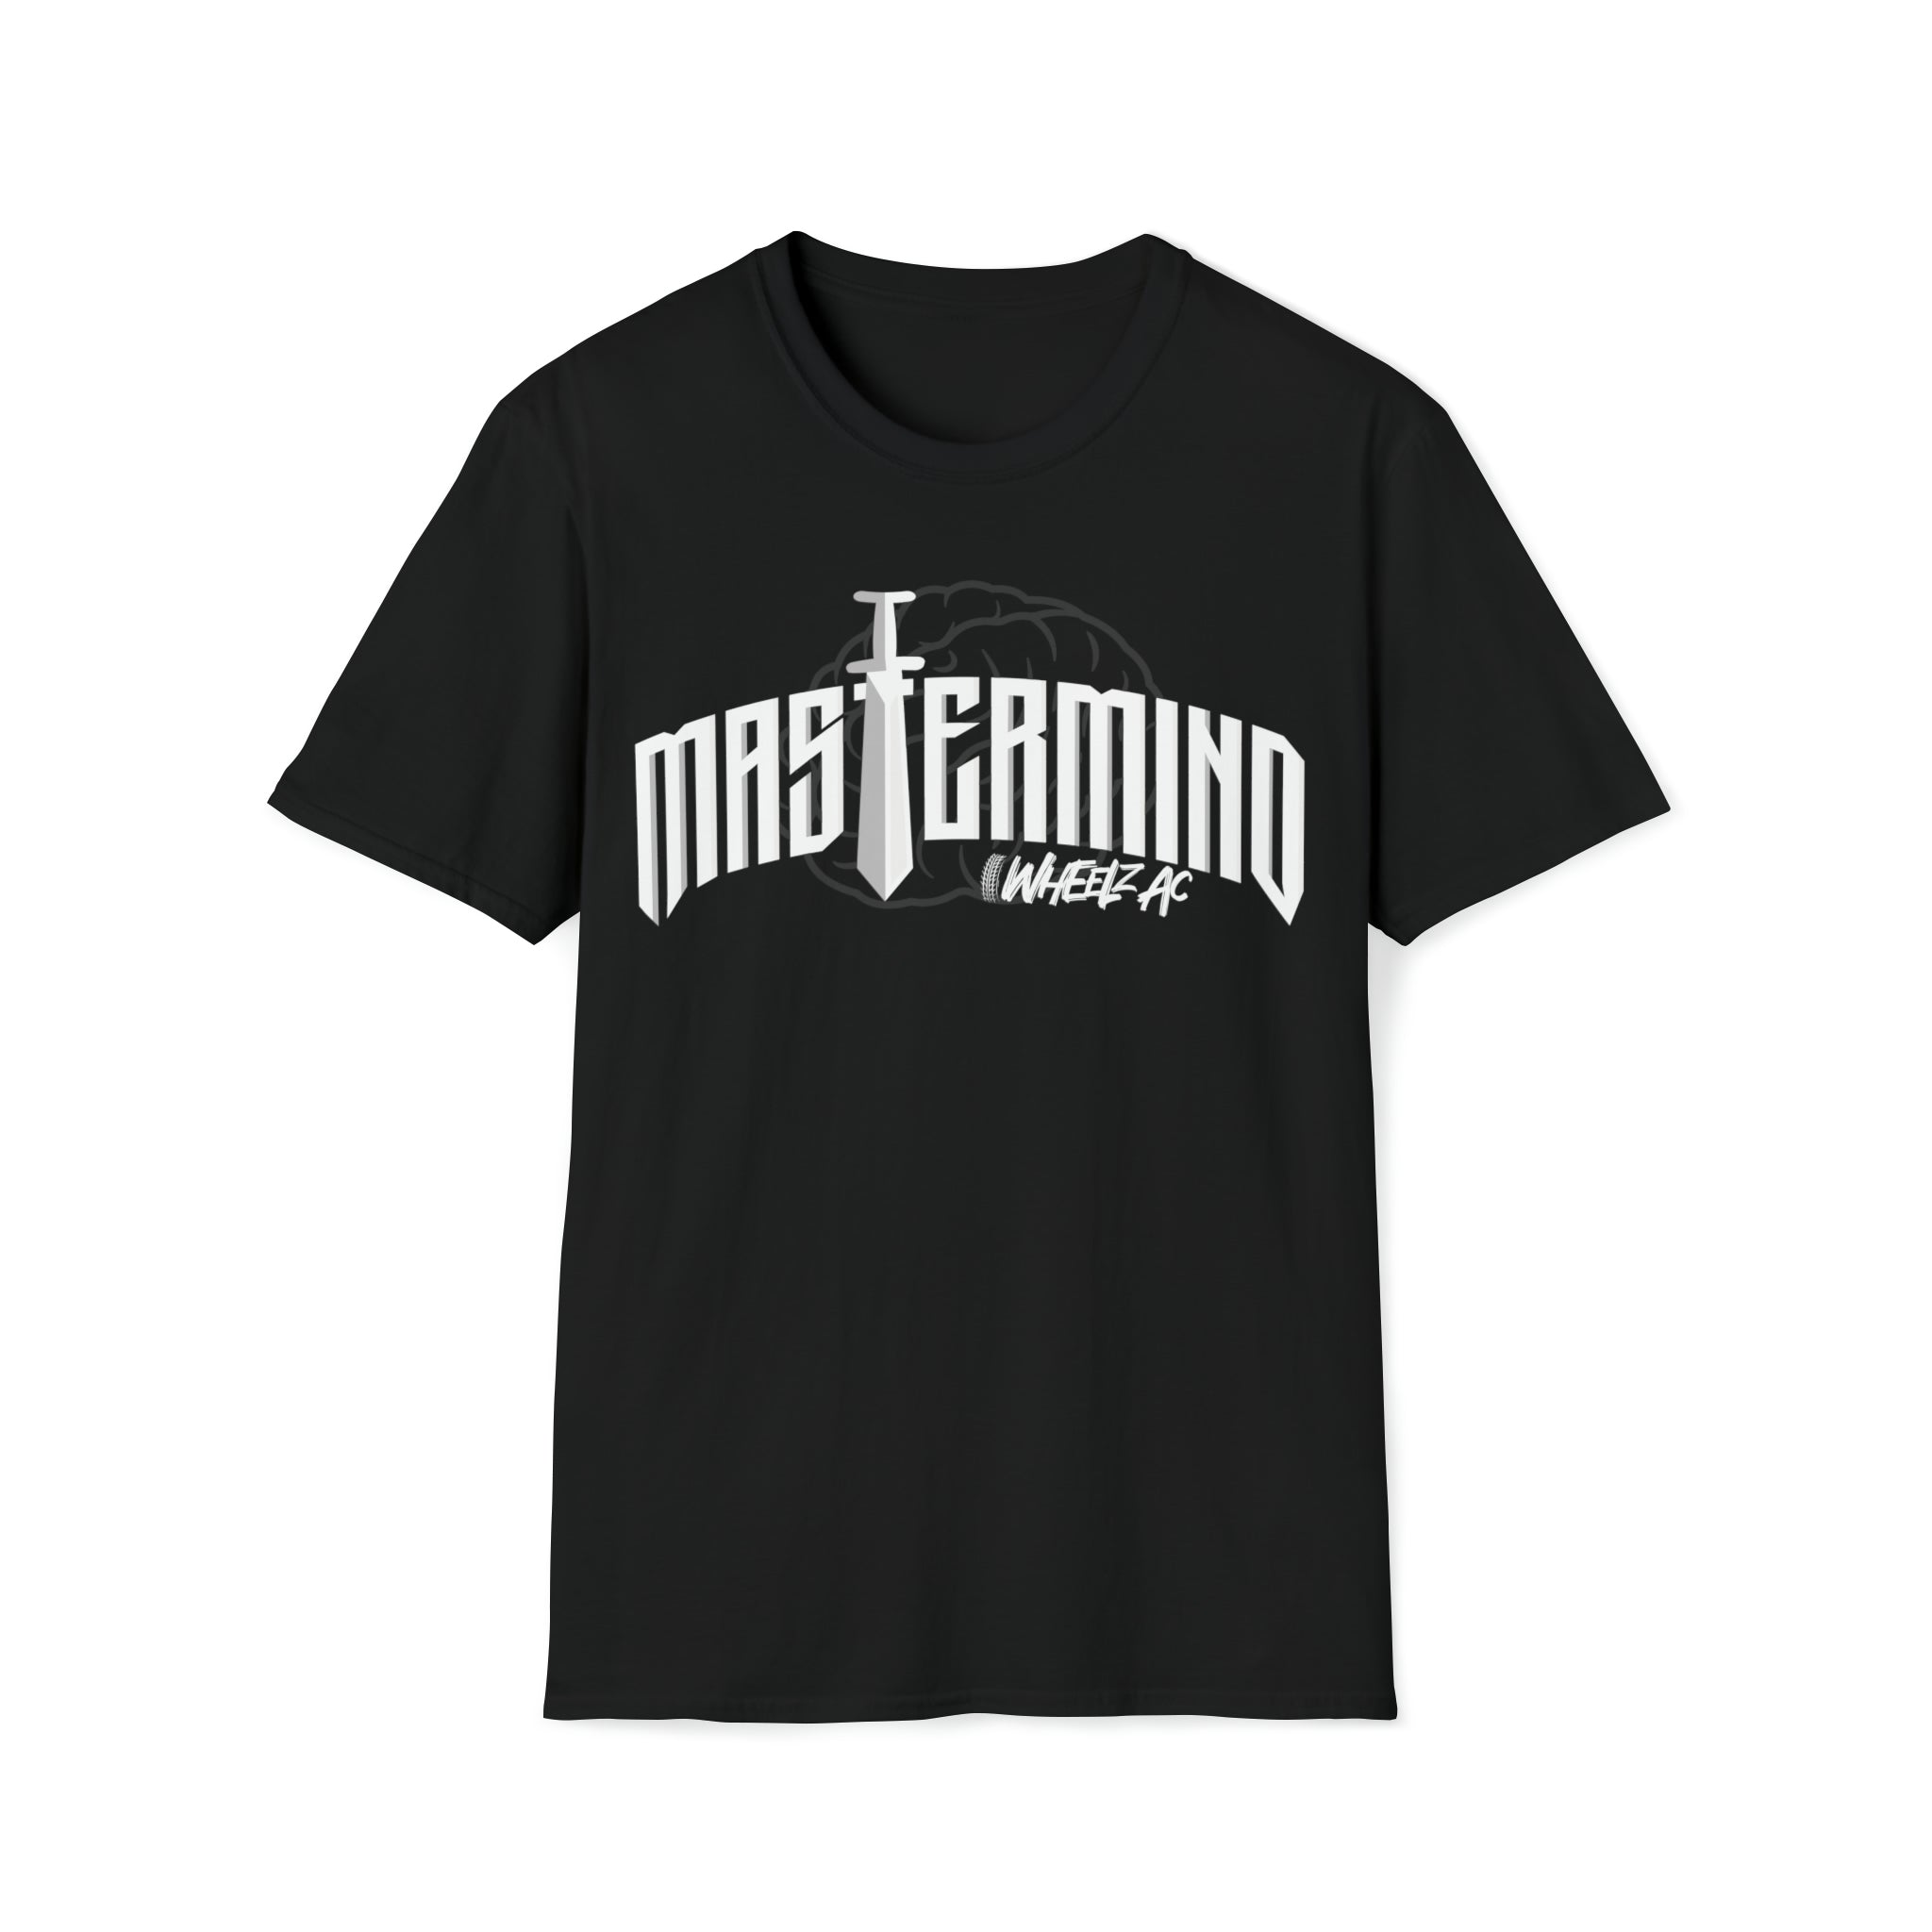 Mastermind T-shirt, black tee, brain and sword shirt